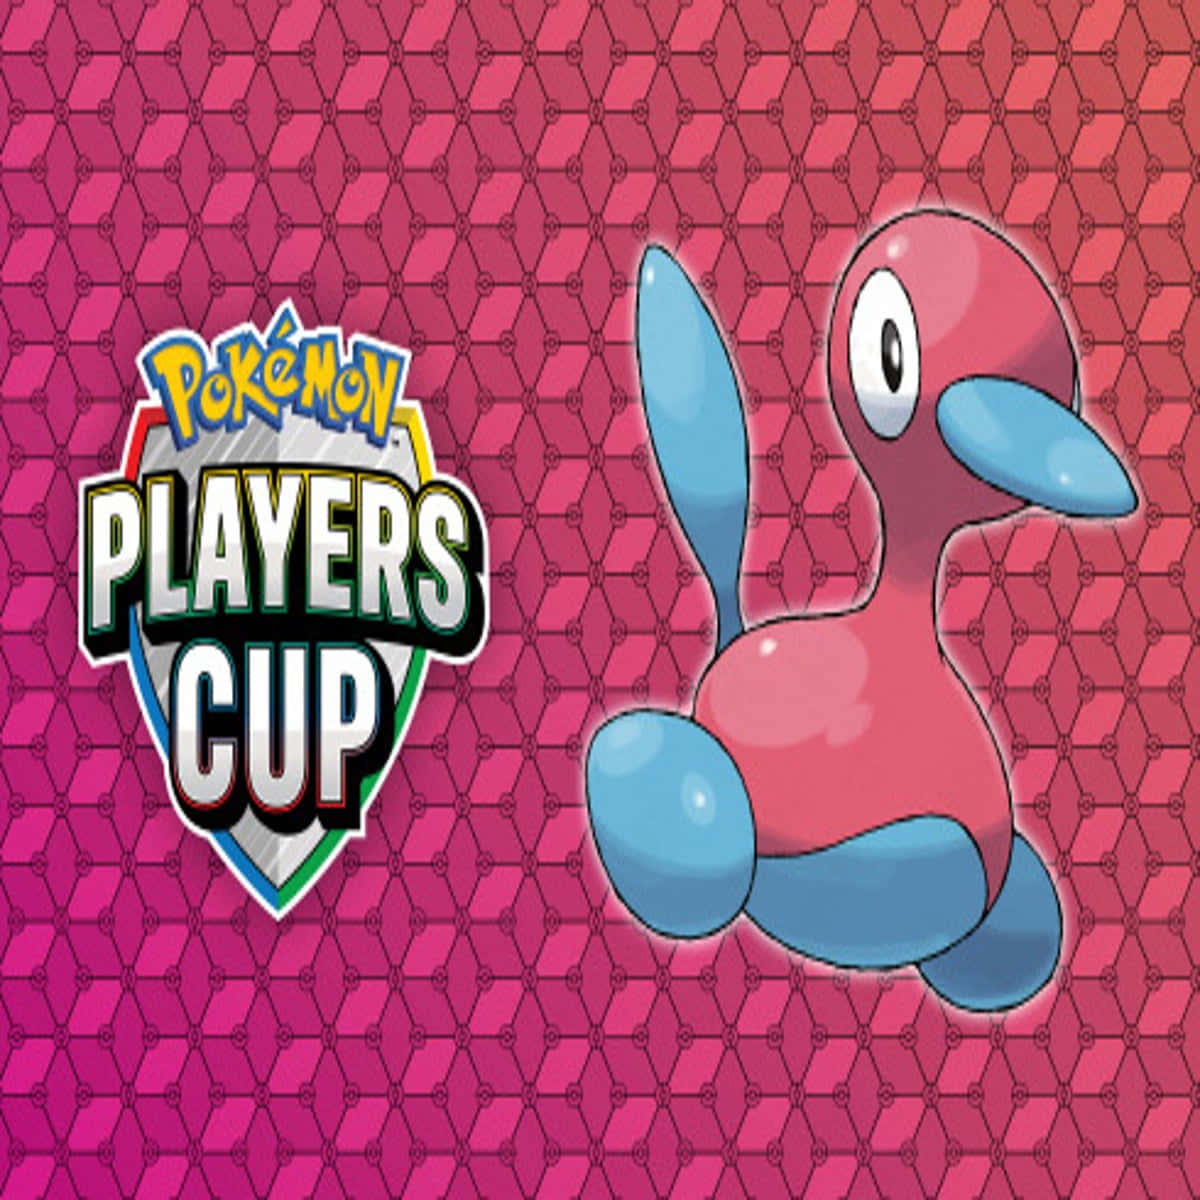 Porygon2 Pokemon Players Cup Poster Wallpaper